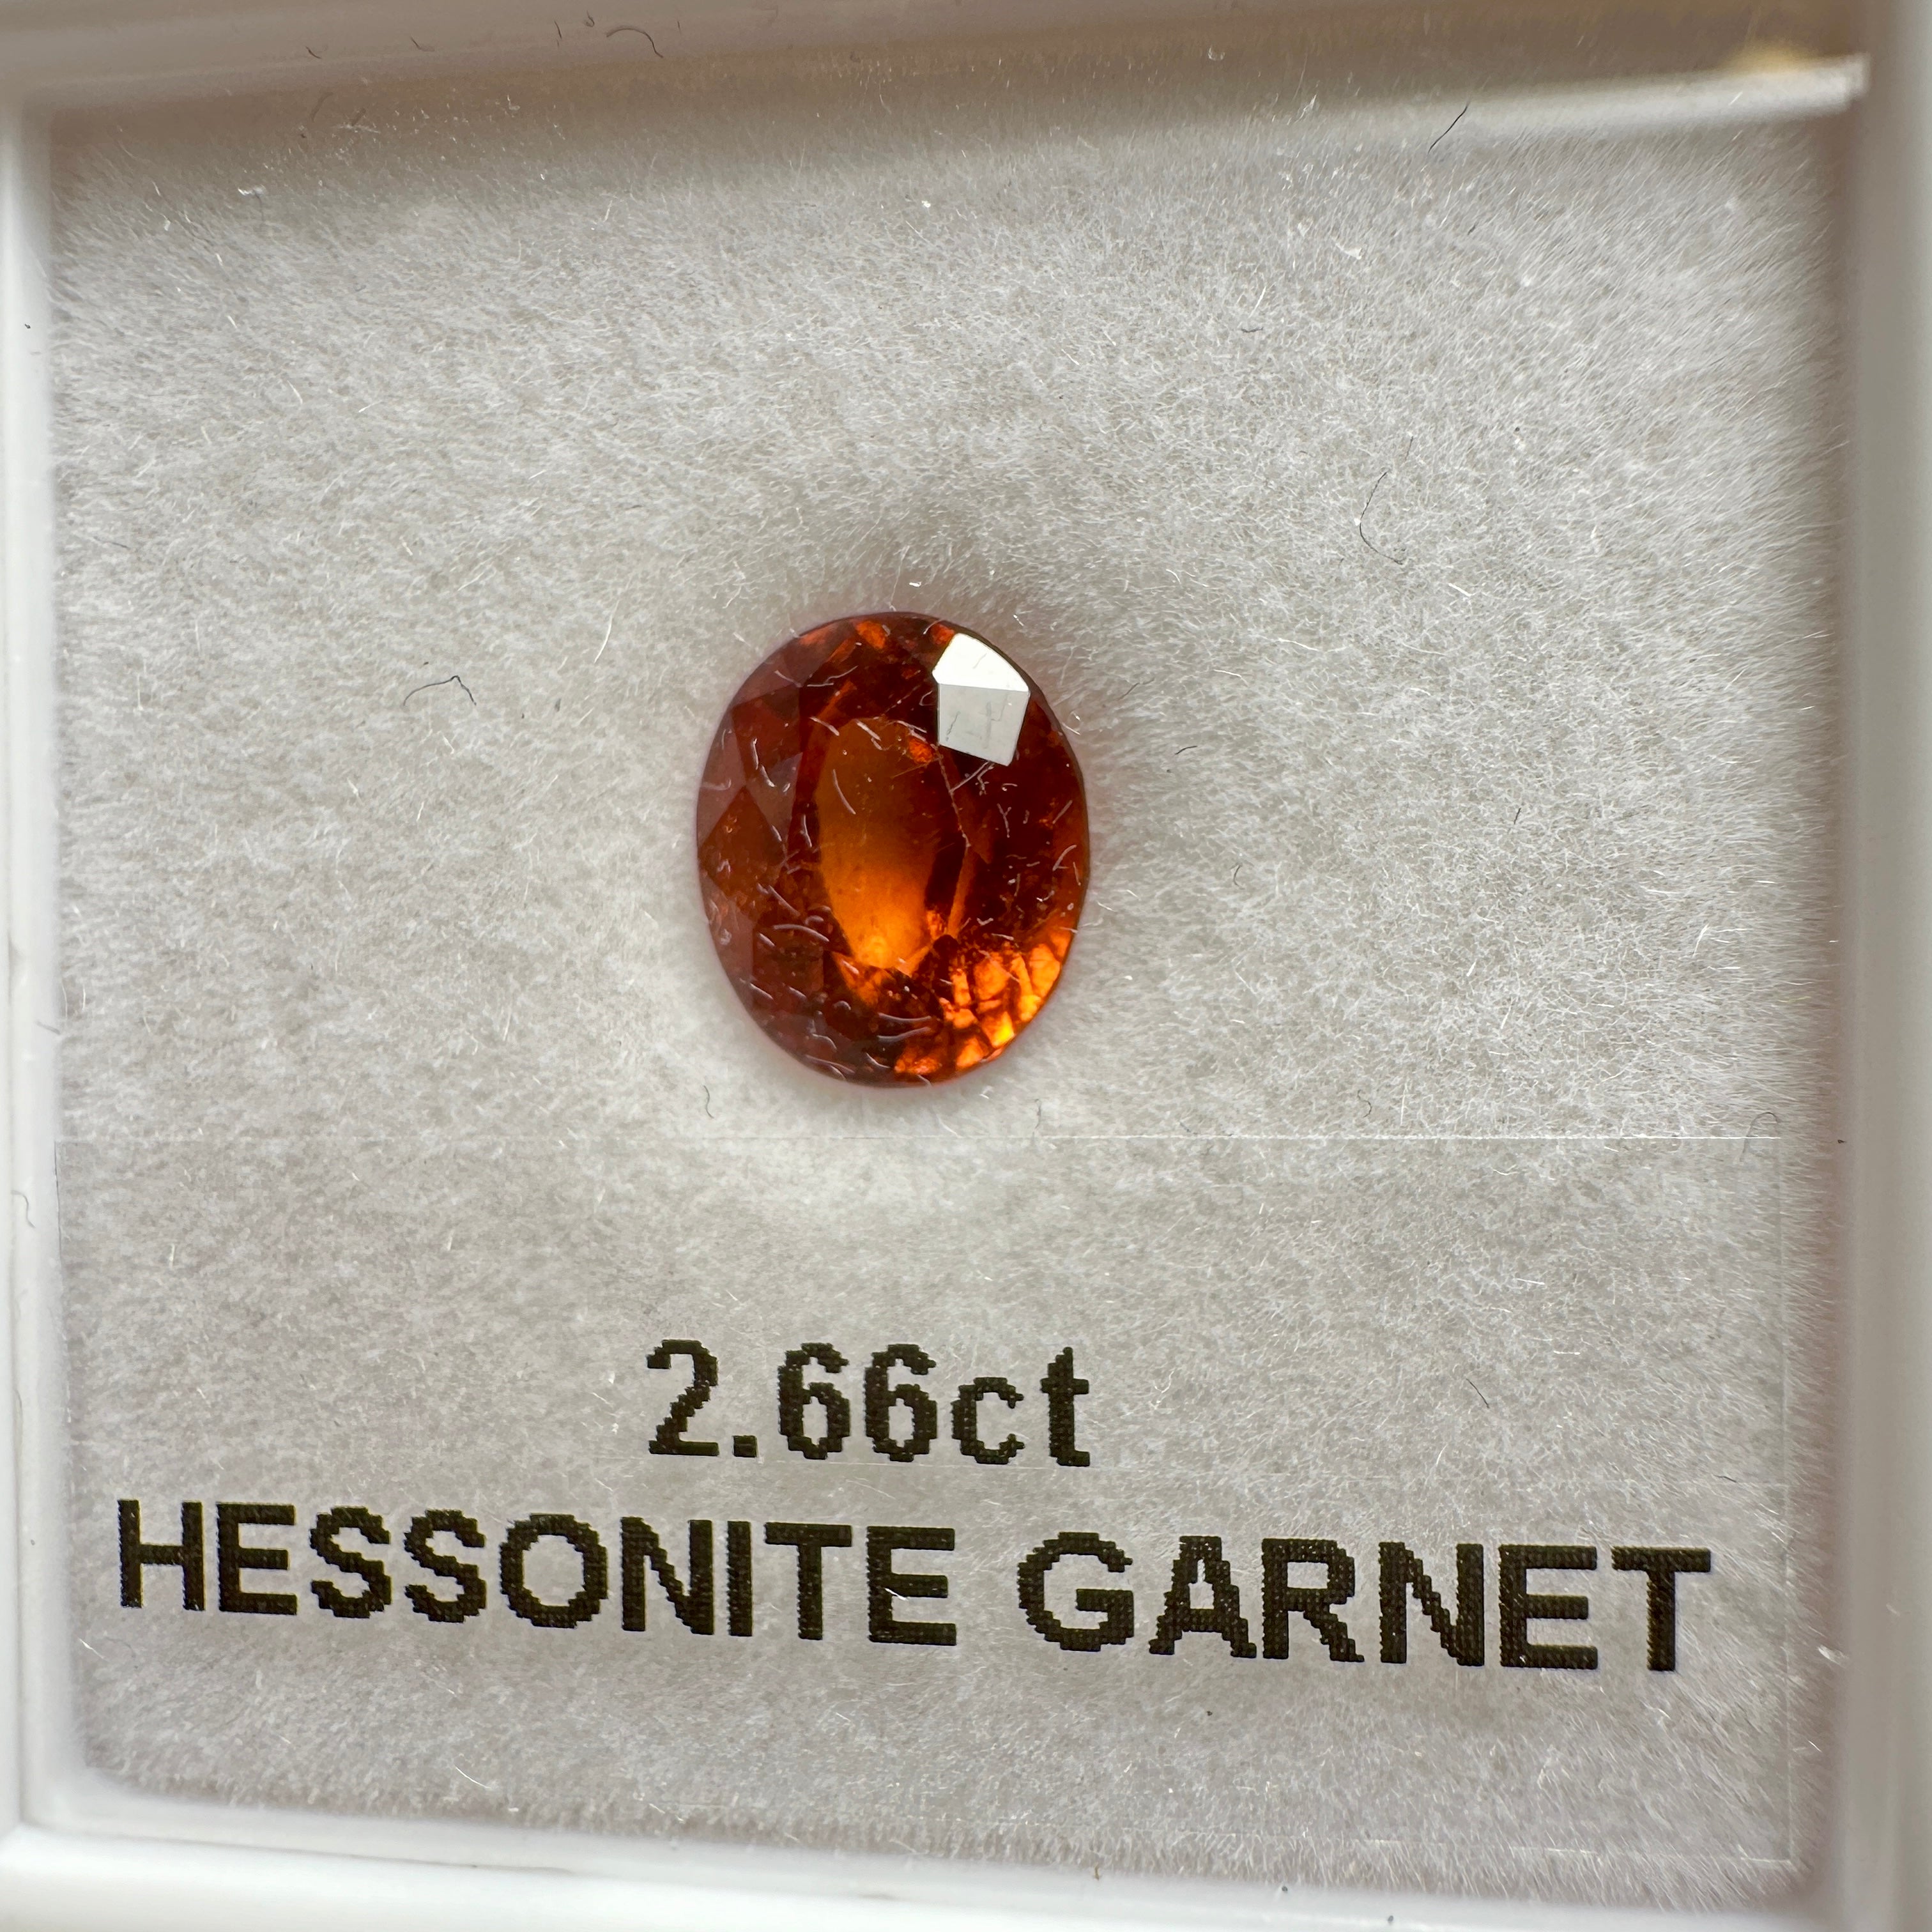 2.66ct Hessonite Garnet, Untreated Unheated, native cut